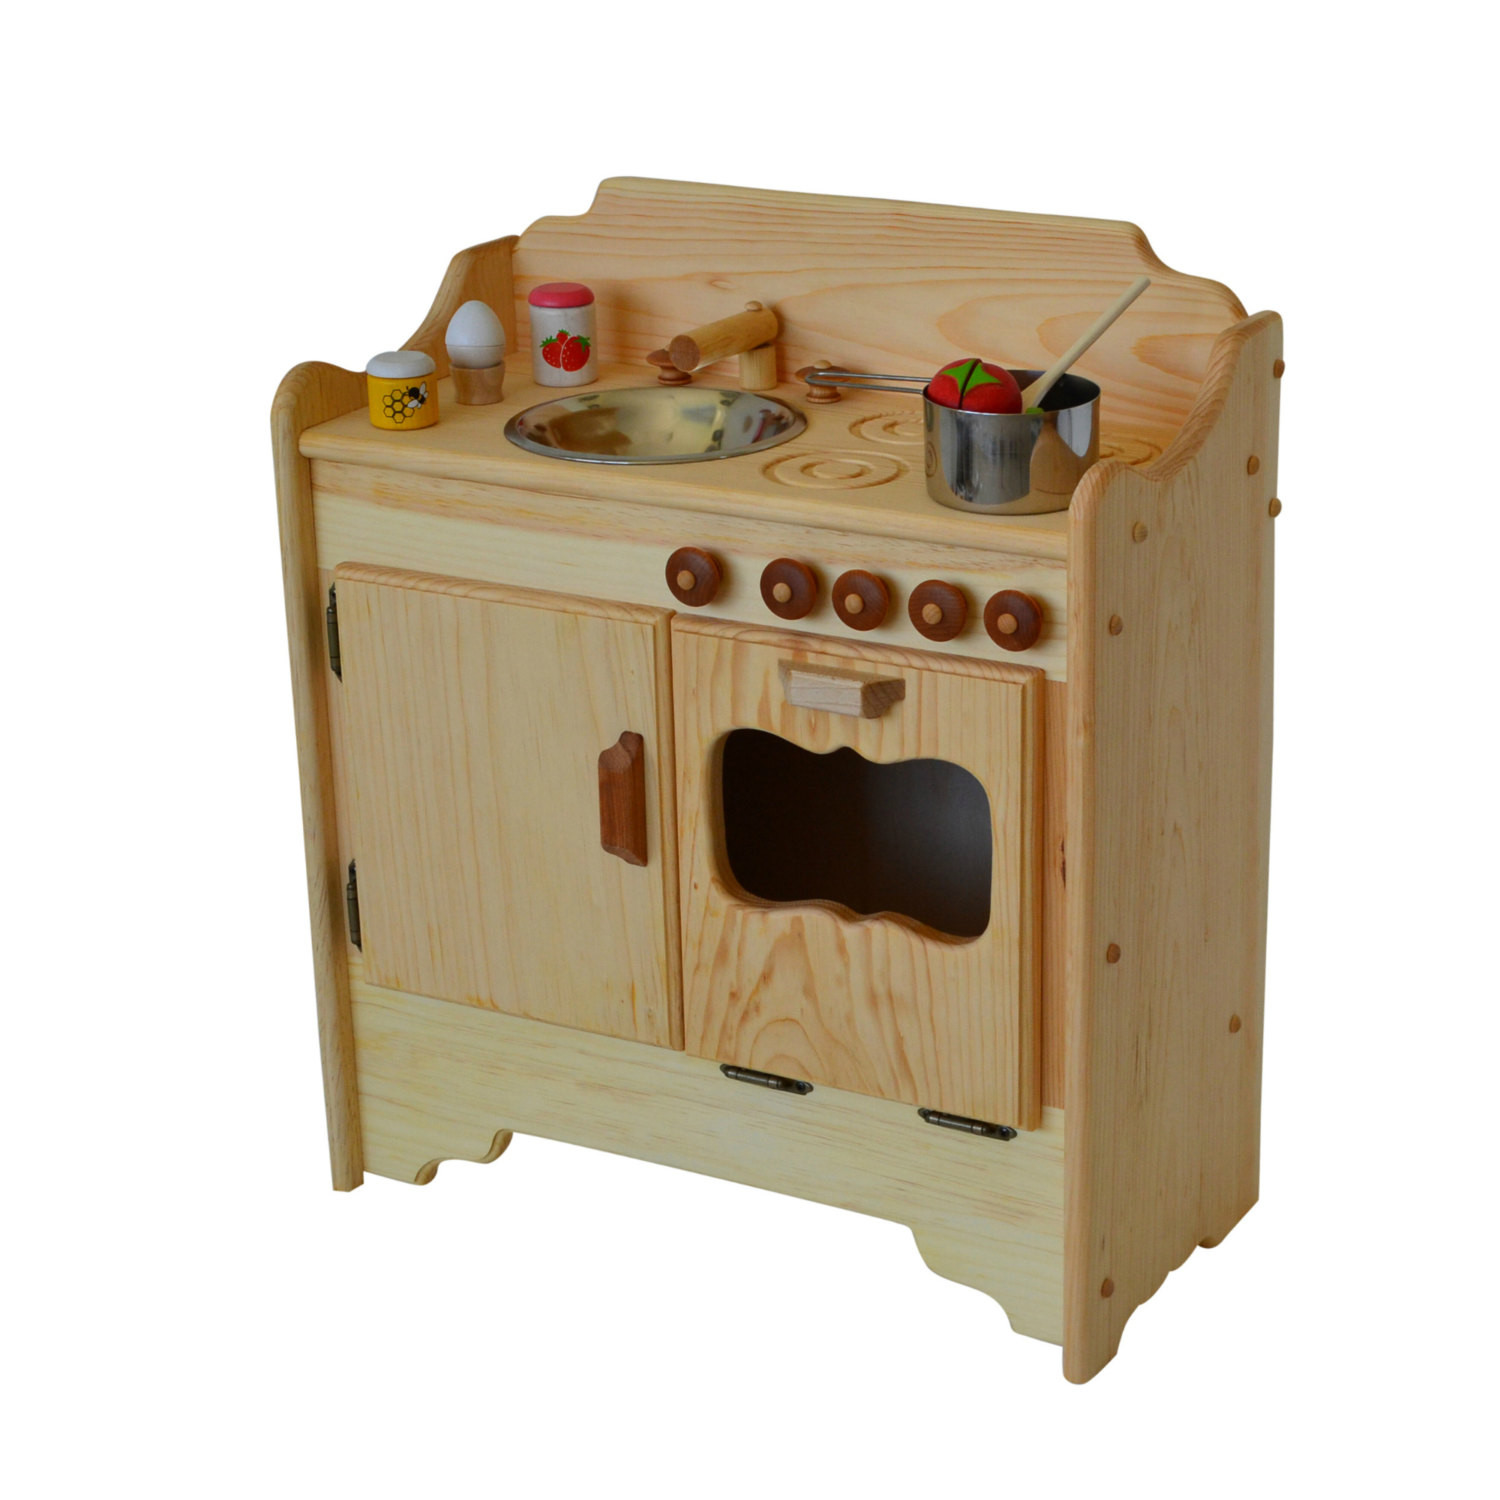 Small Wooden Play Kitchen
 Play Kitchen Waldorf Wooden Play Kitchen Wooden Toy Kitchen